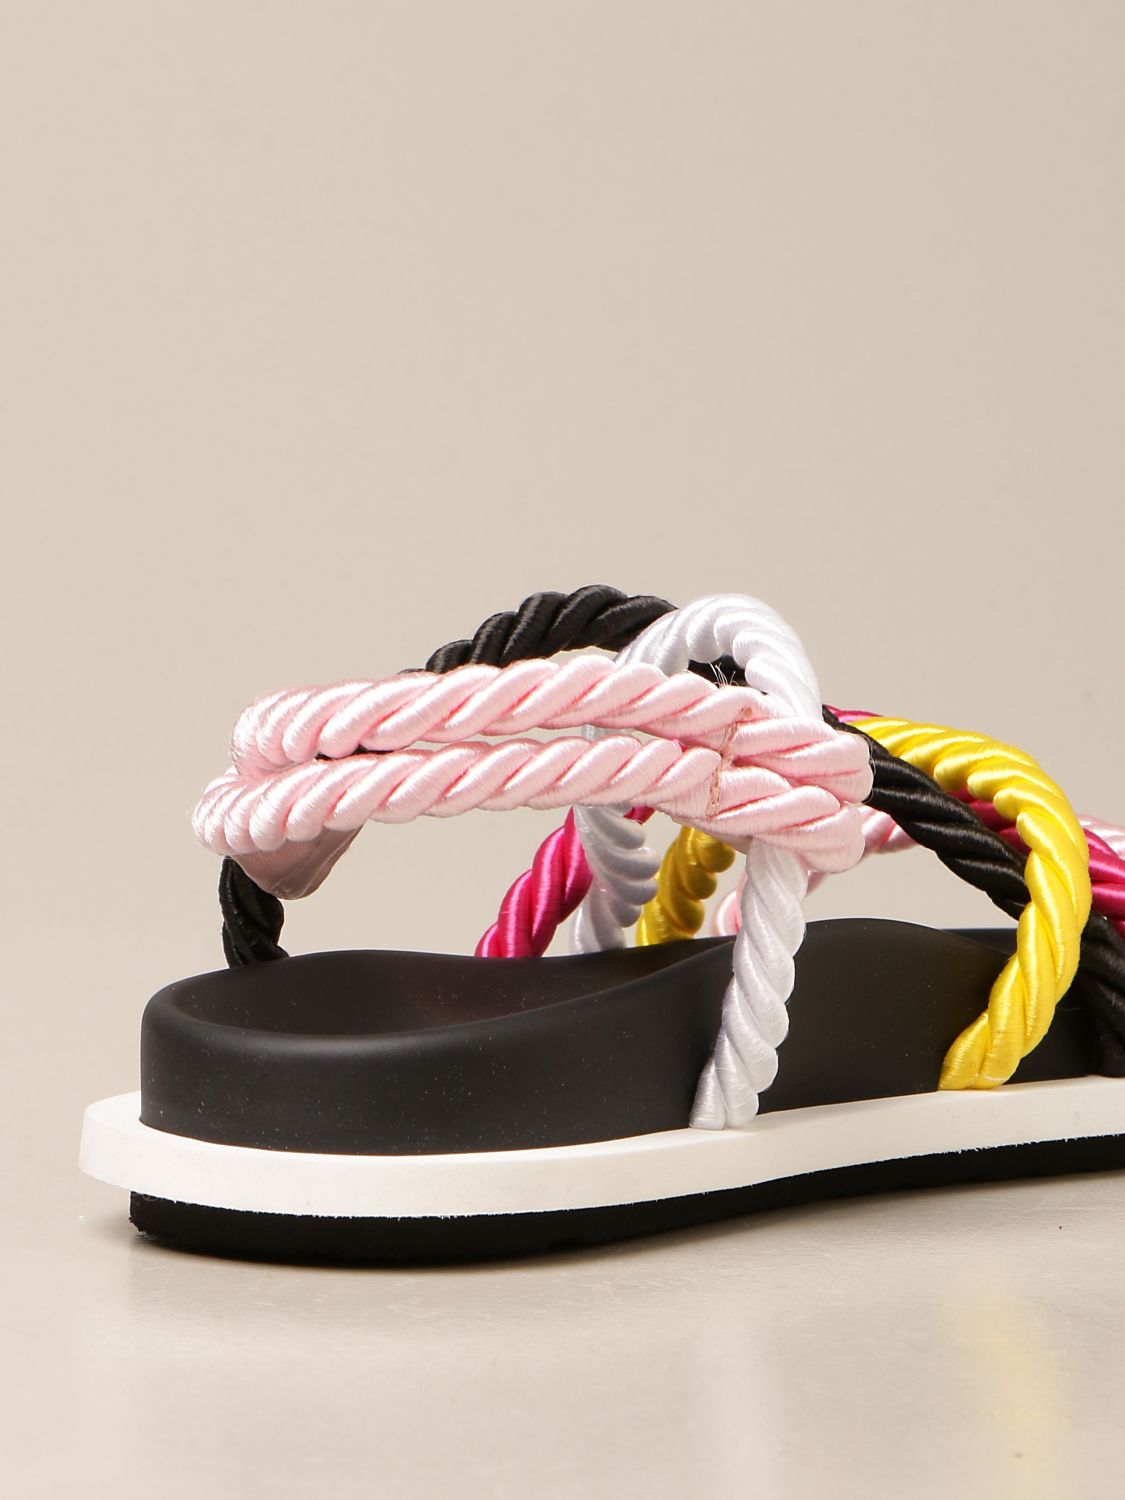 Sandalo a infradito in corda multicolor Giglio.com Donna Scarpe Sandali Sandali in corda 